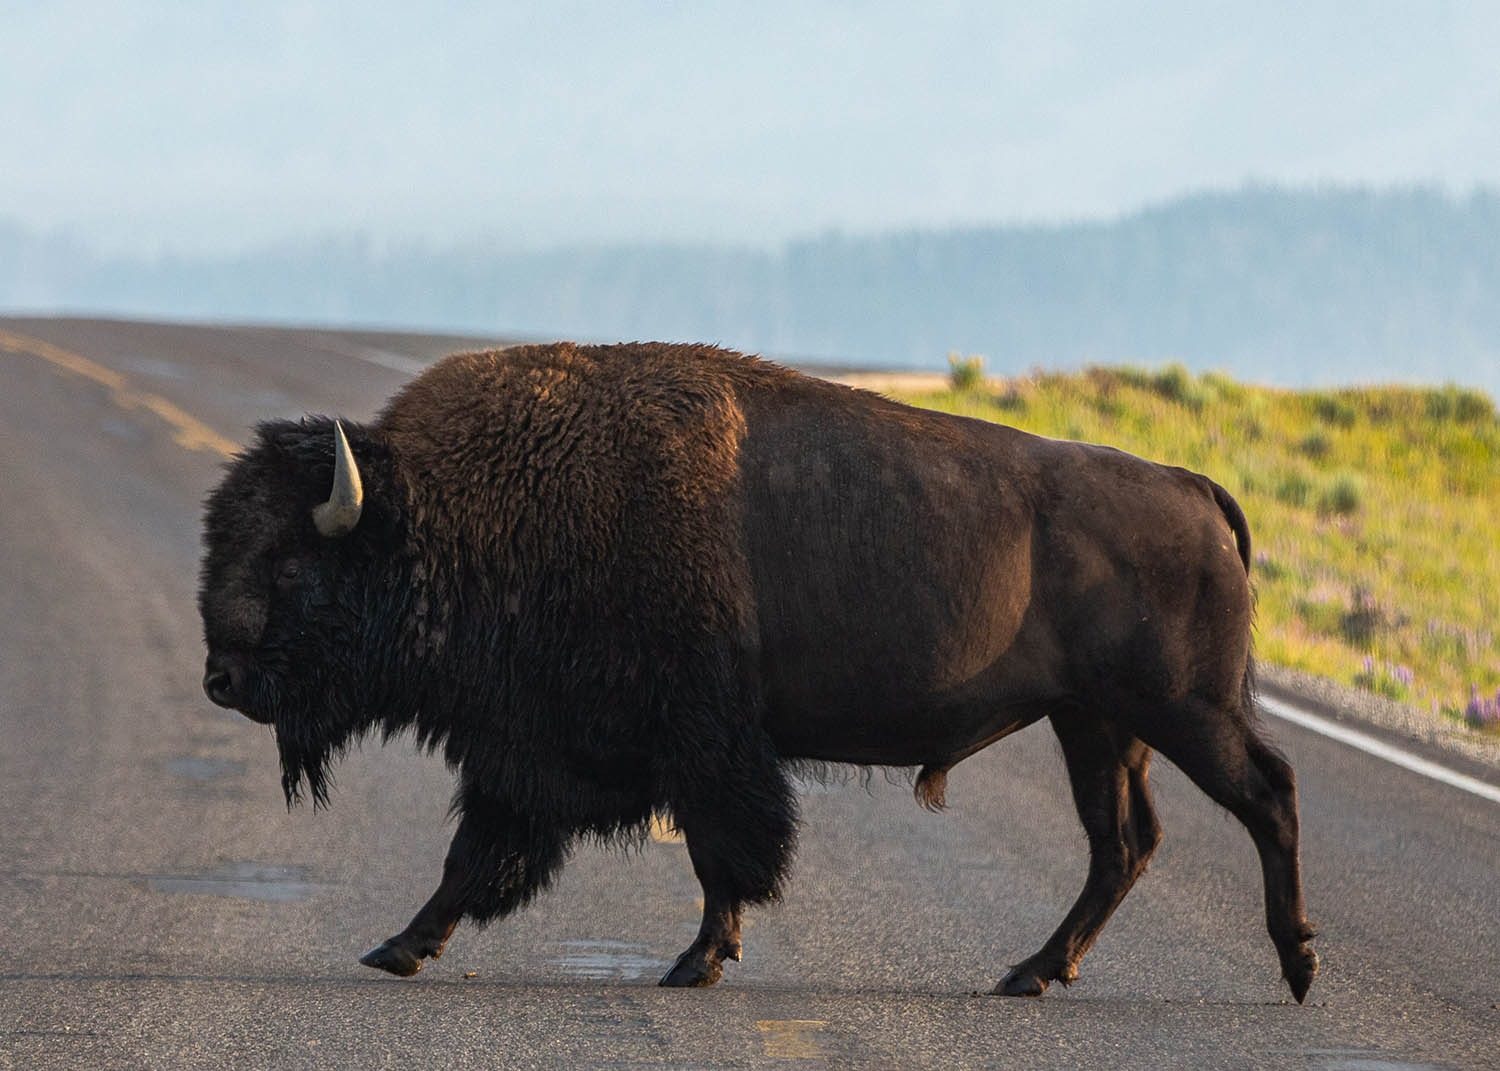 Bison crossing road